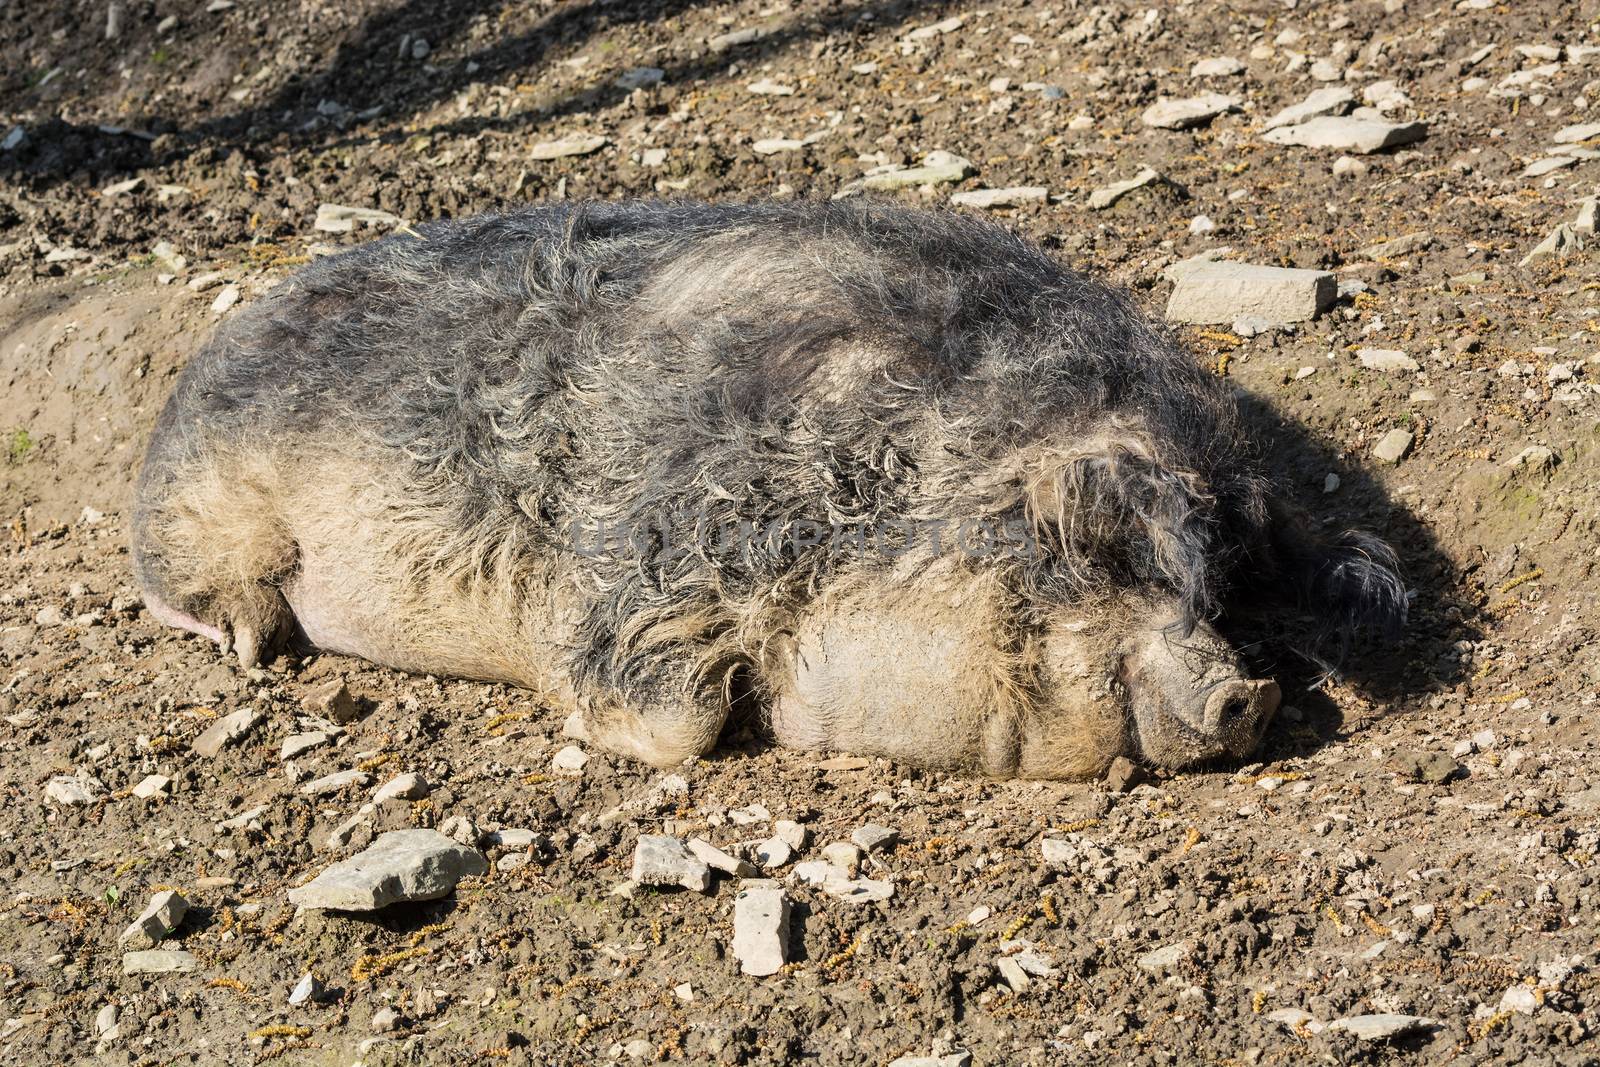 European wild boar in the mud in the warm summer sun lying.